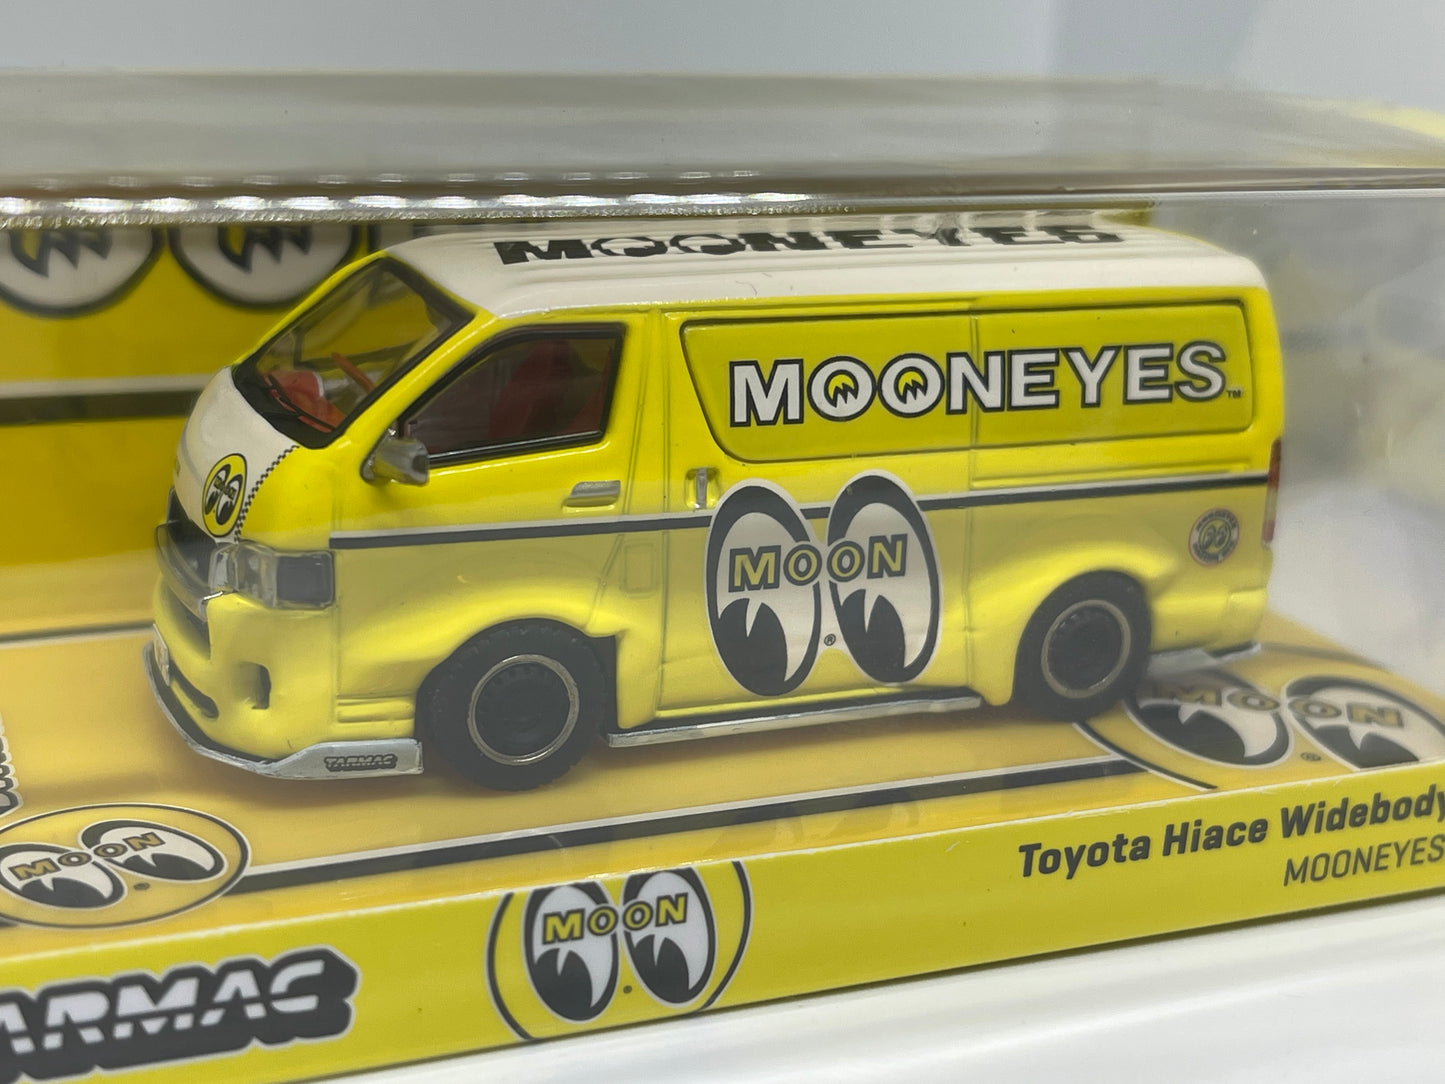 Tarmac Works - Toyota Hiace Widebody Mooneyes Yellow